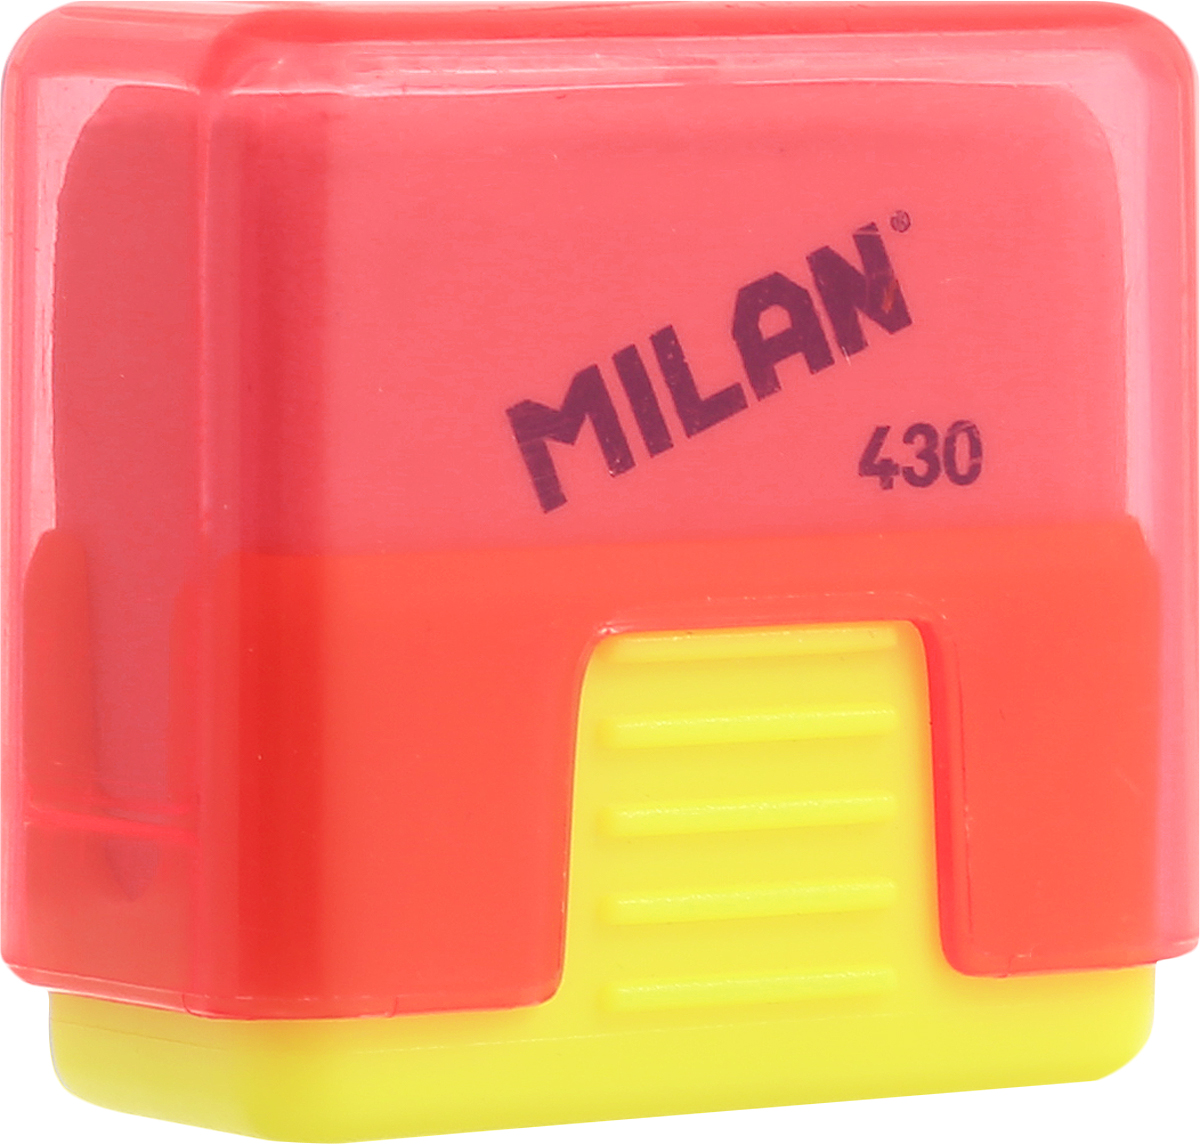 Milan Ластик School 430 цвет желтый красный